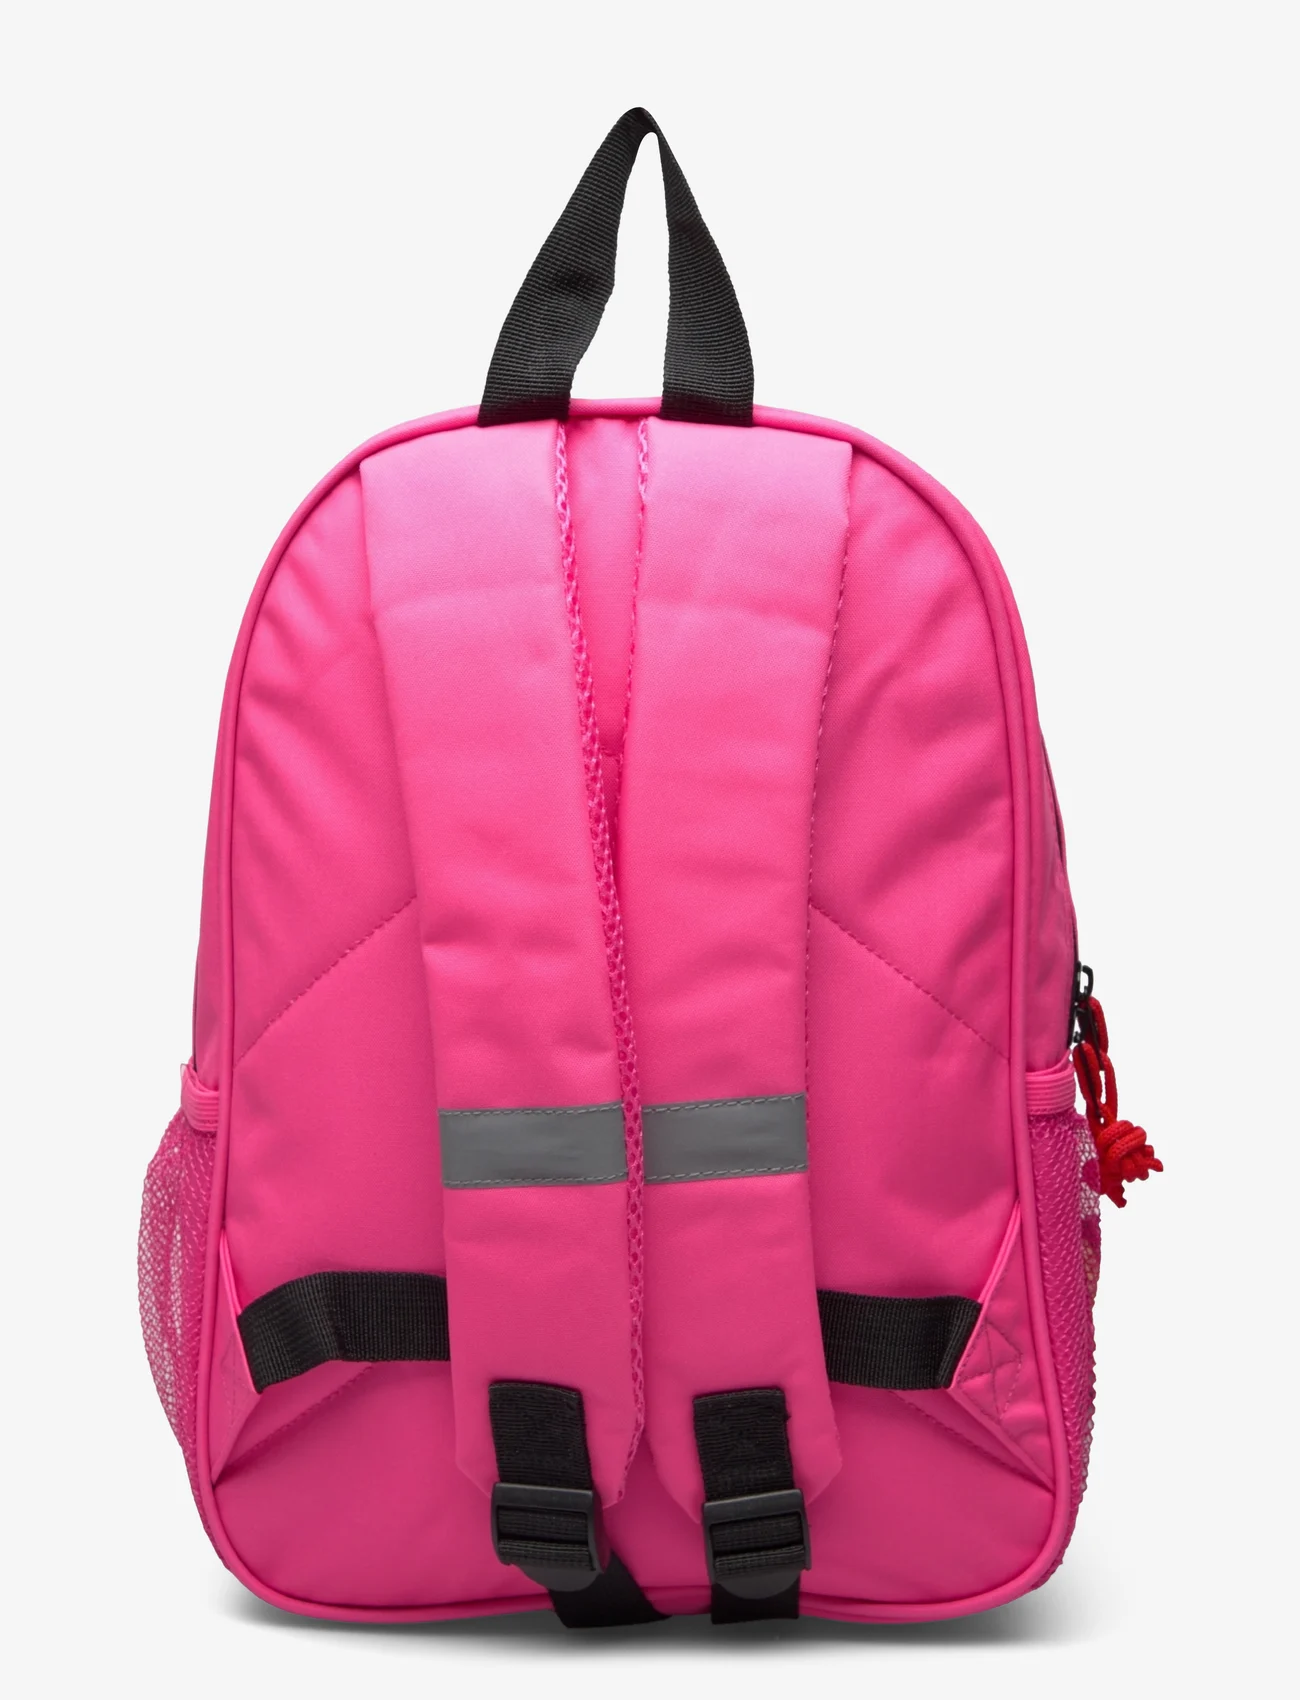 Euromic - L.O.L. NEXT LEVEL medium backpack - sommerkupp - pink - 1